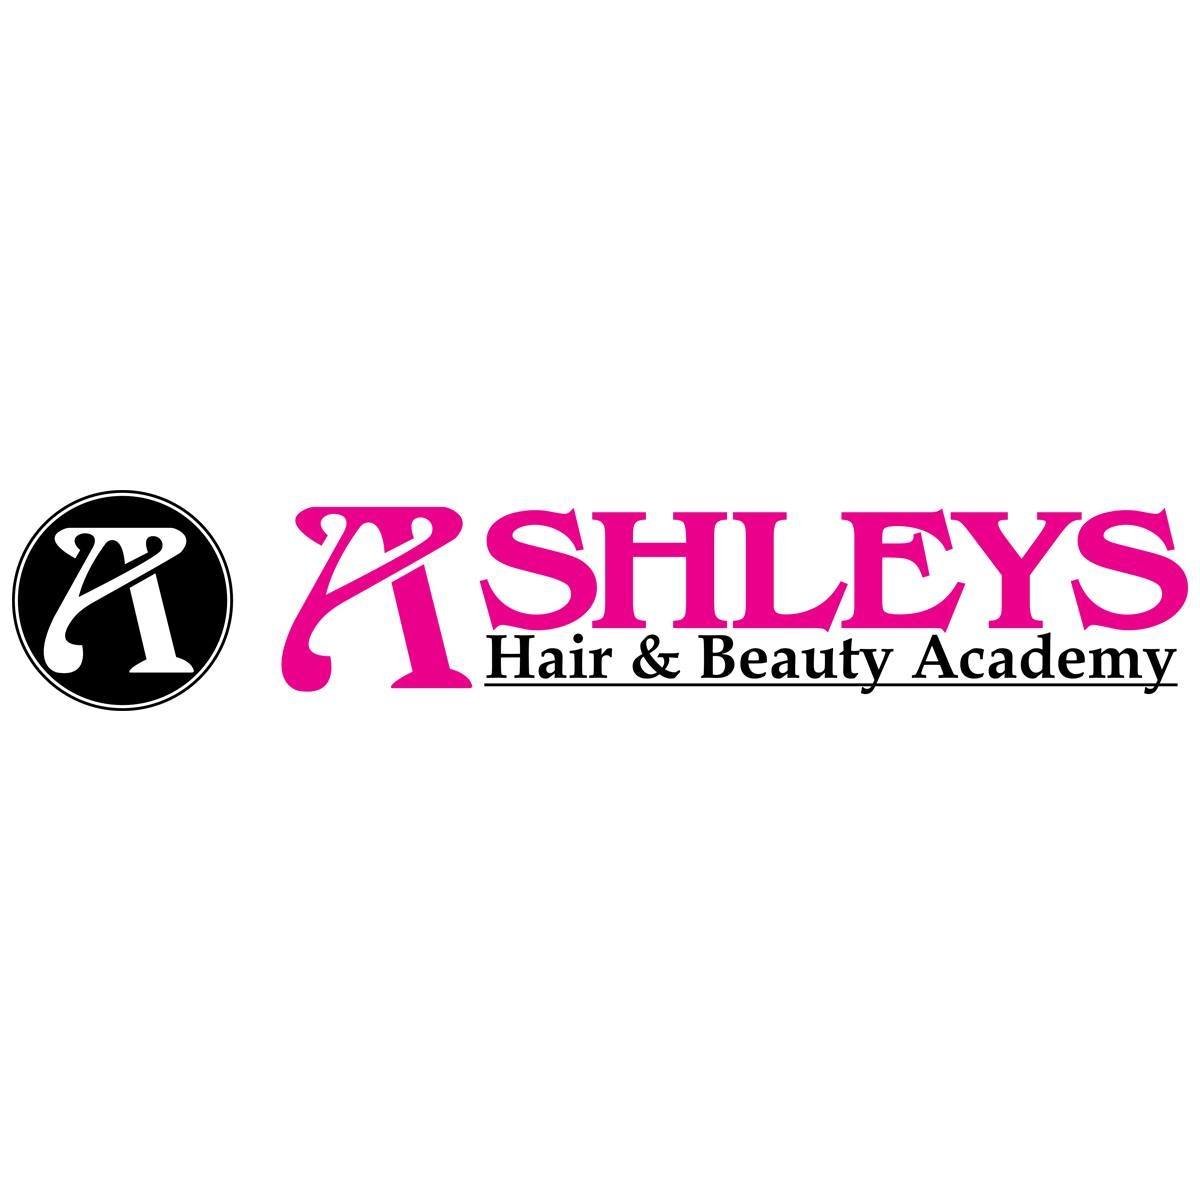 Ashleys Certificate in Pattern Making & Sewing (Fashion Department)